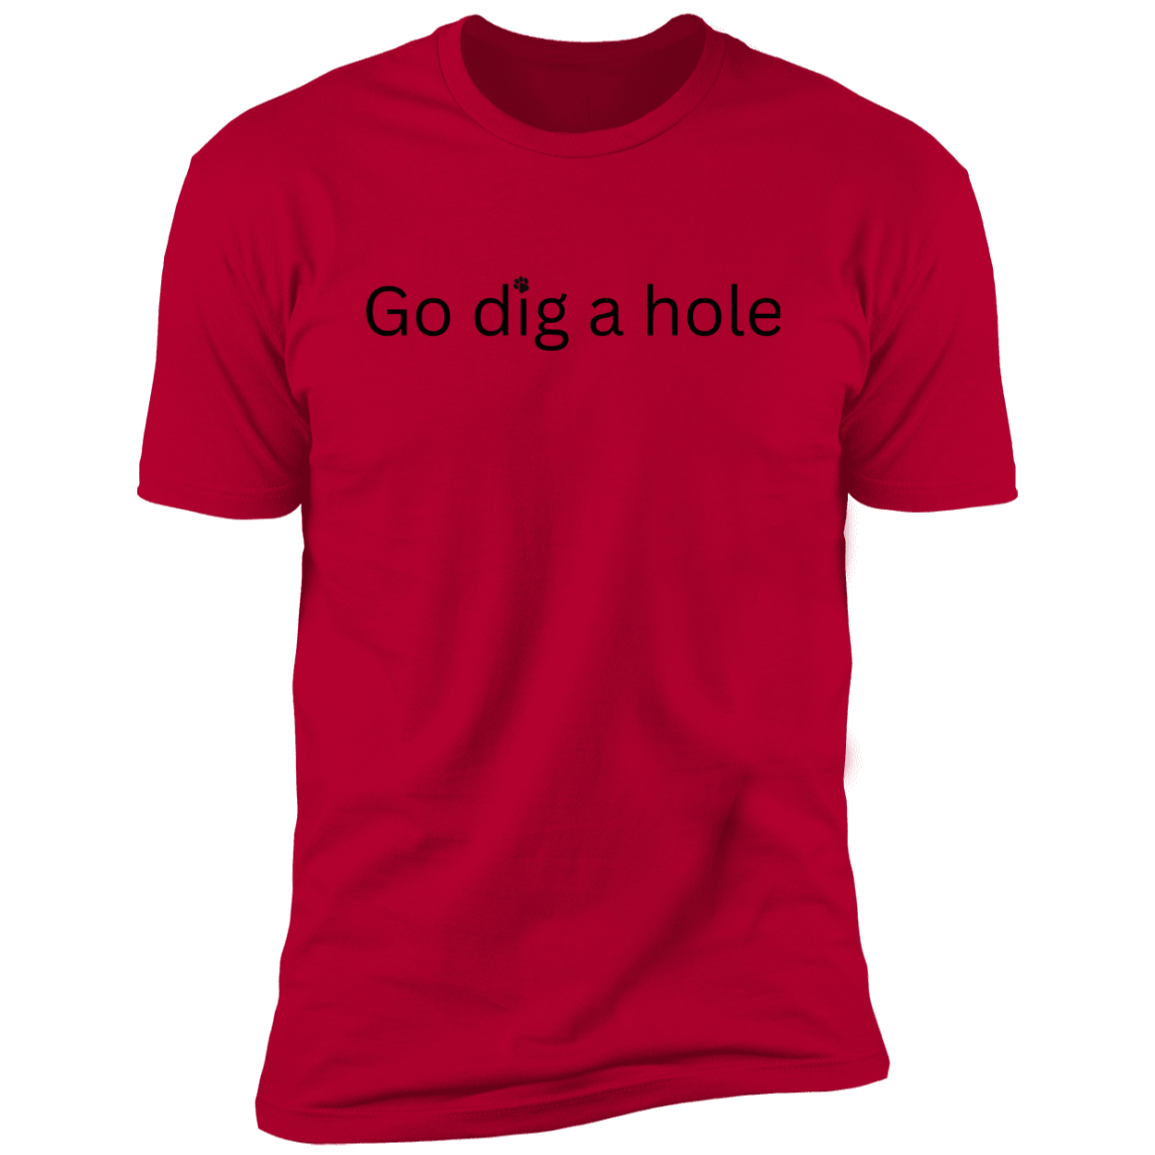 Go Dig a Hole Dog T-Shirt, Dog shirt for humans, funny dog shirt, funny t-shirt, in red